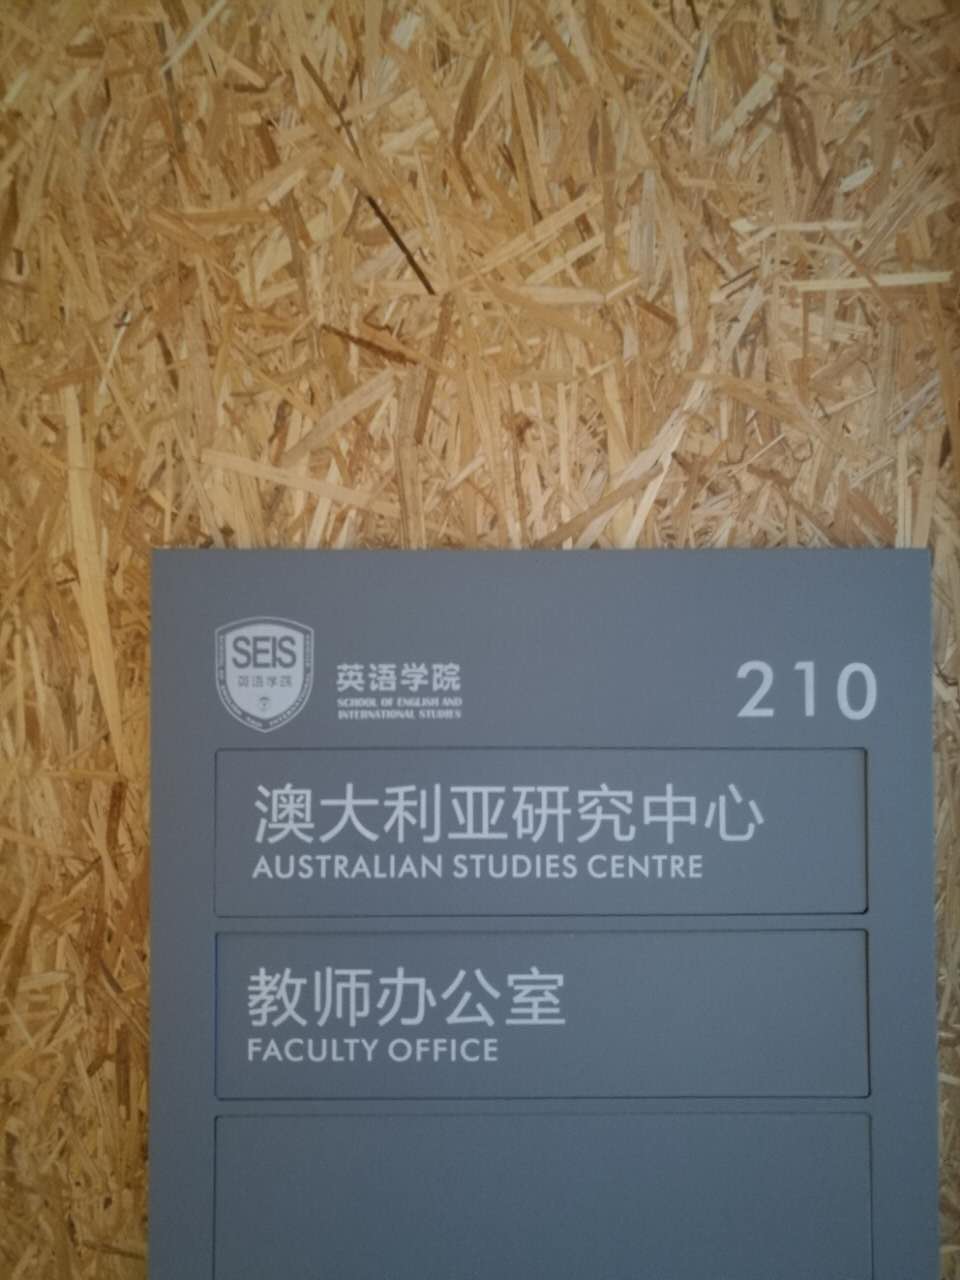 The Australian Studies Centre of Beijing Foreign Studies University. [Photo provided by Li Jianjun]